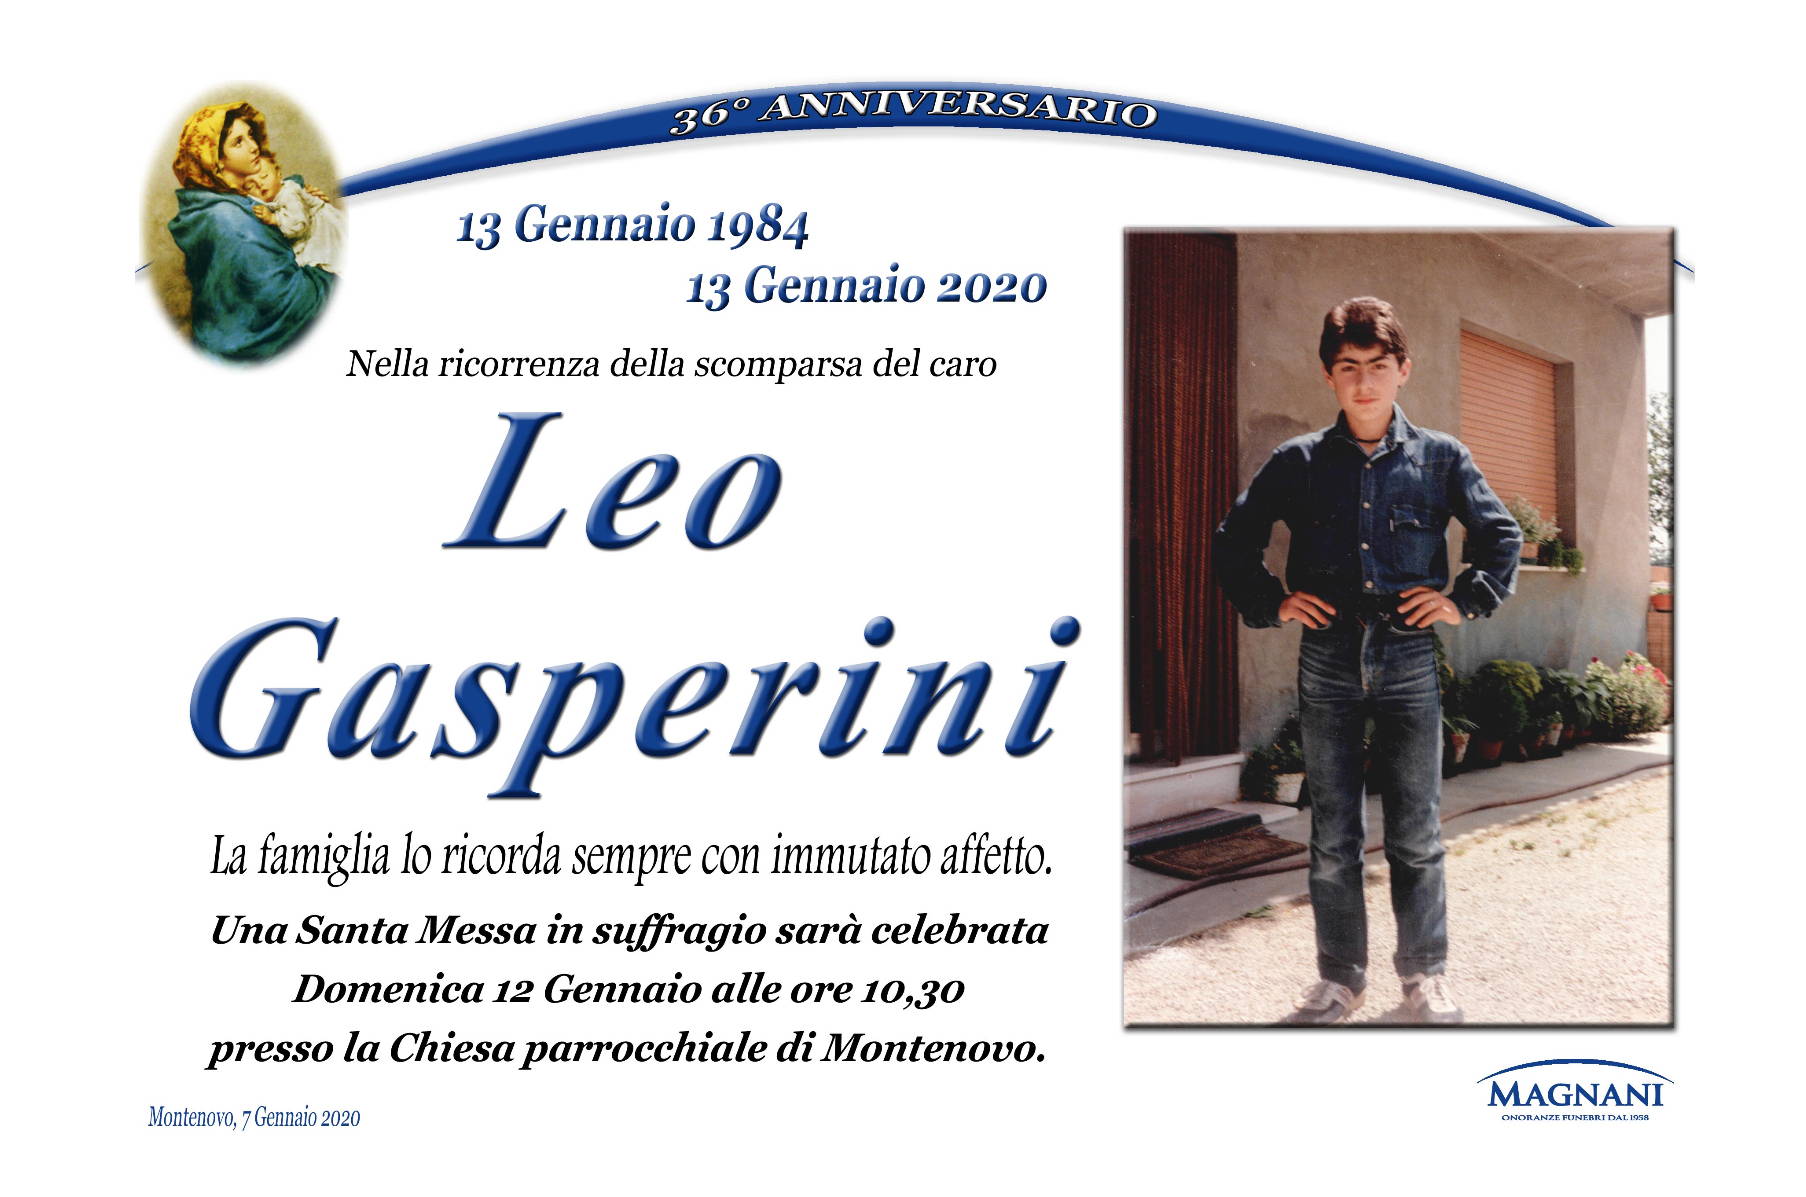 Leo Gasperini